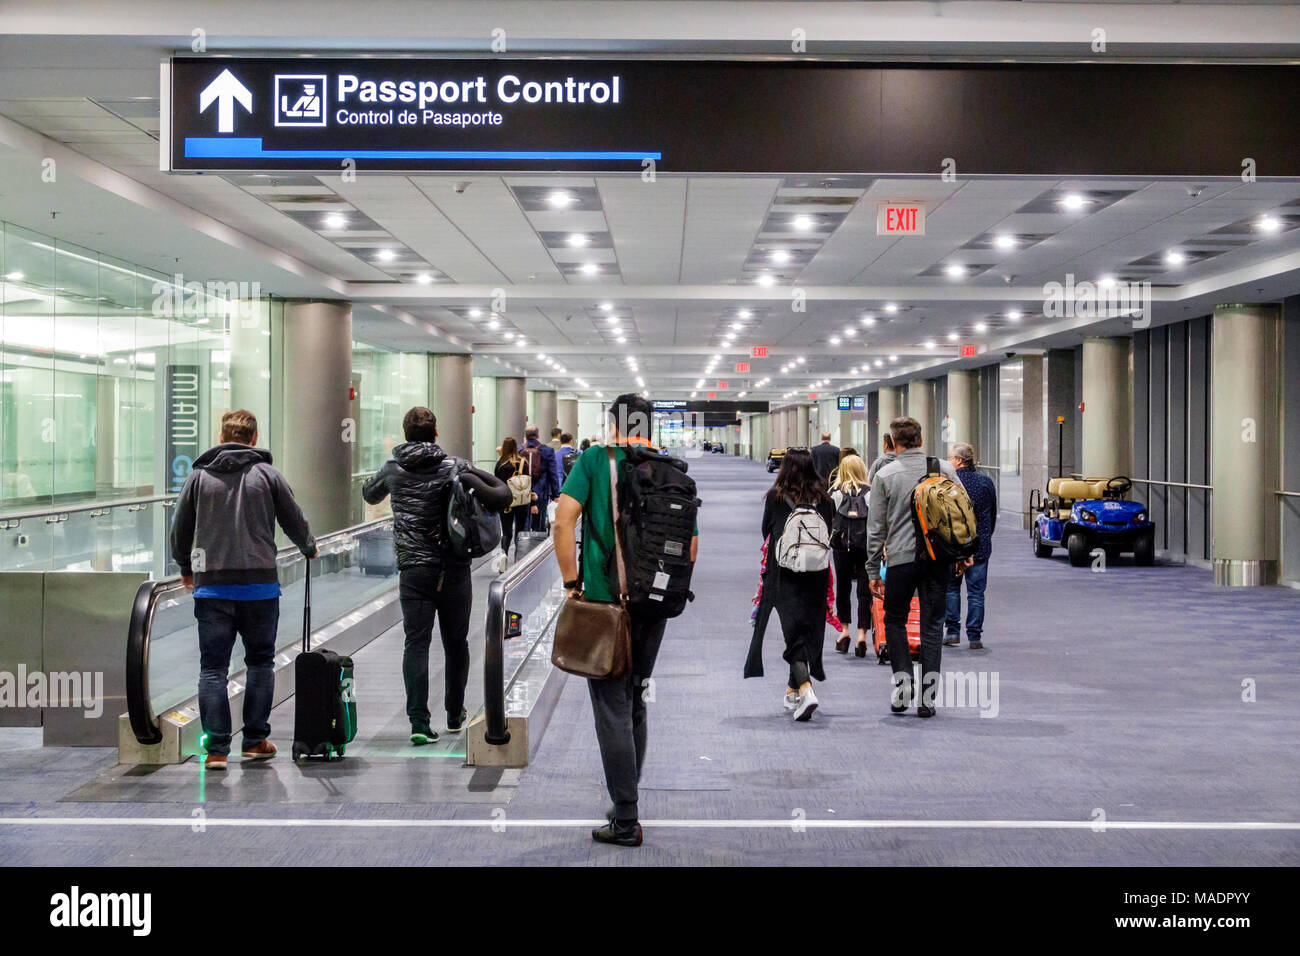 Miami Florida,International Airport MIA,Passport Control,arriving passengers,man men male,woman female women,moving walkway,interior inside,FL17120300 Stock Photo